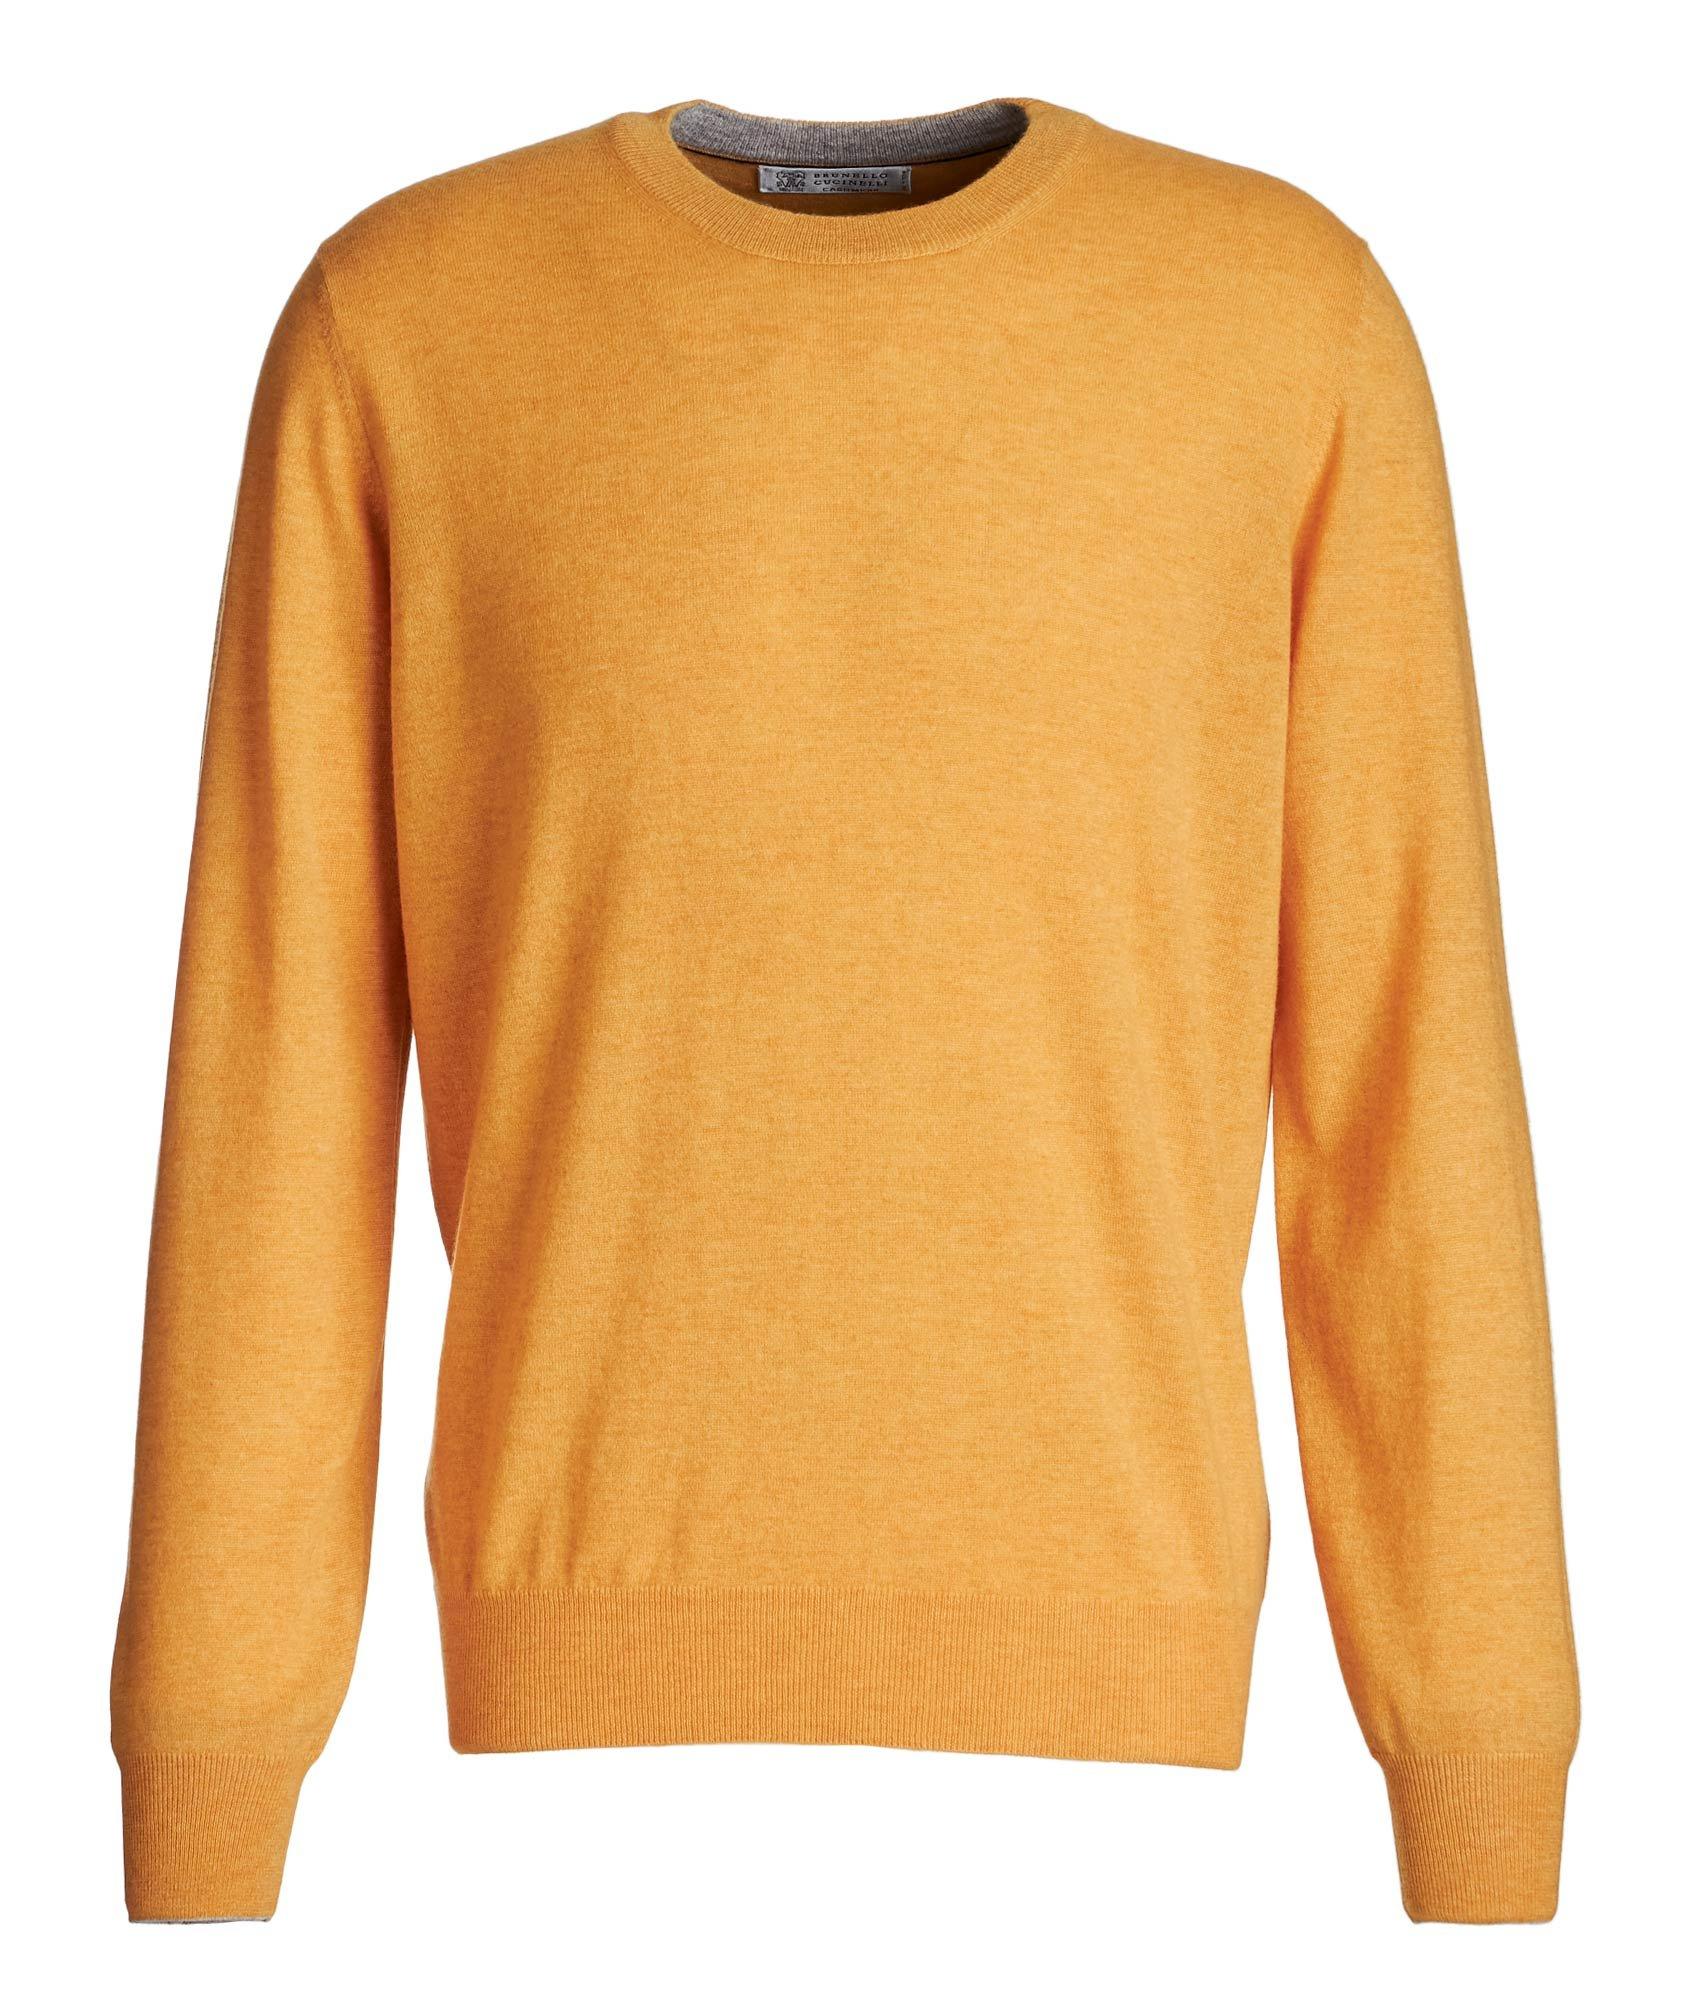 Cashmere Sweater image 0